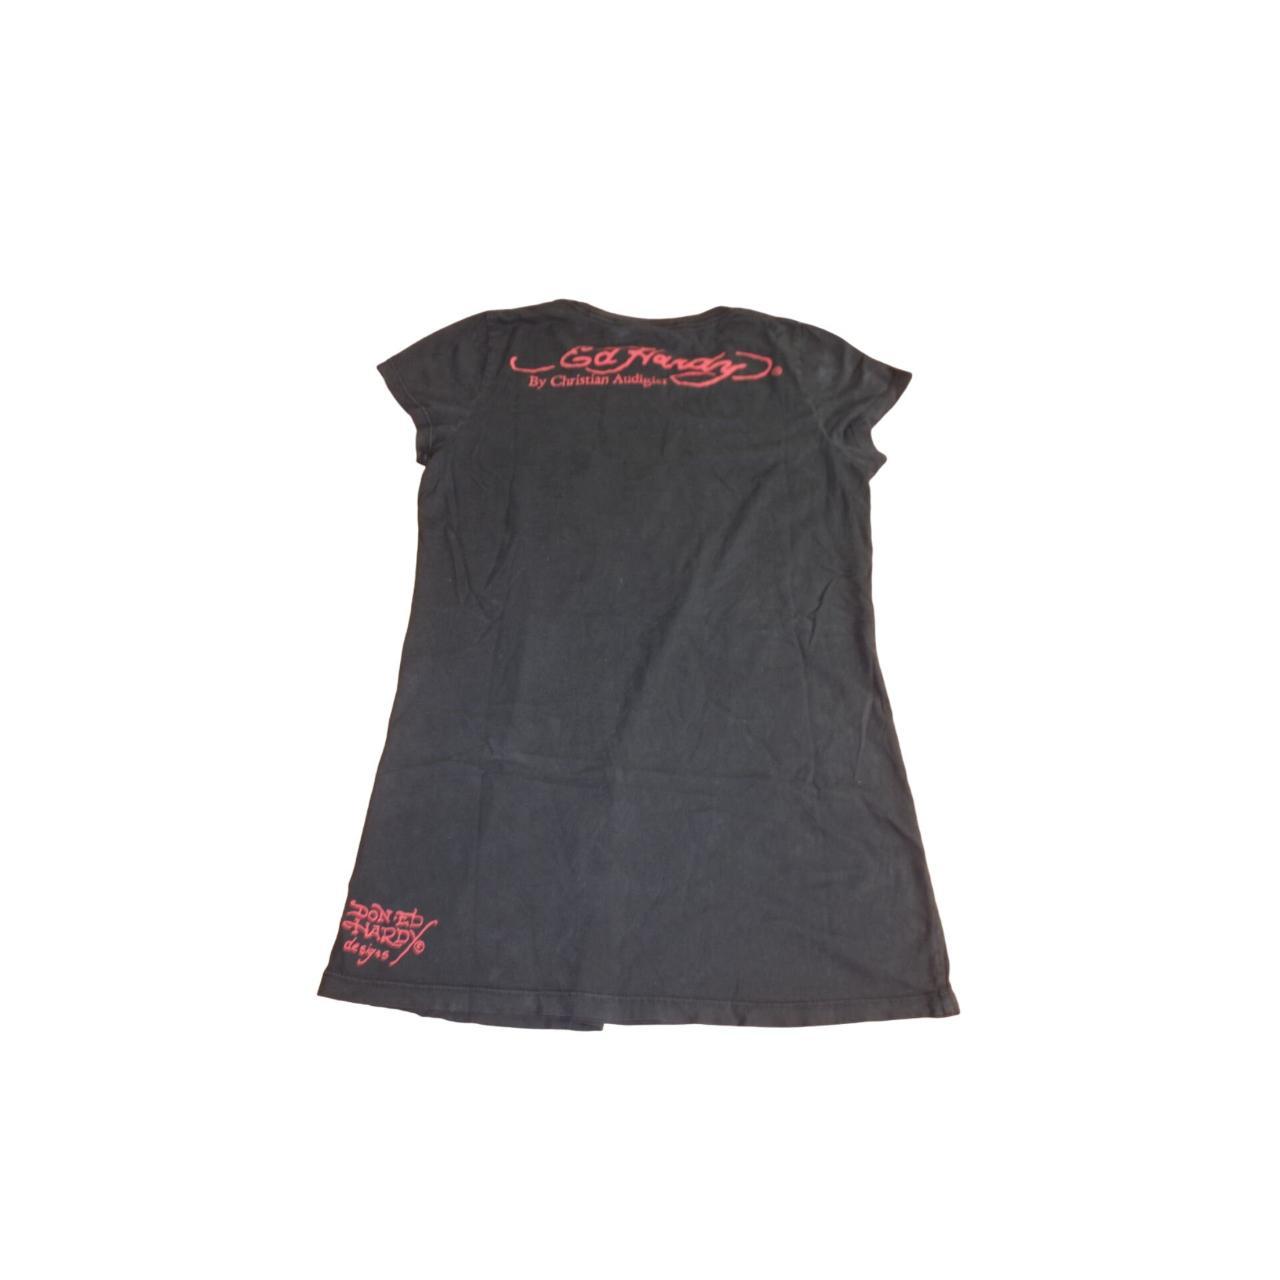 Vintage 2000s Ed Hardy Love Tee Shirt L Black... - Depop